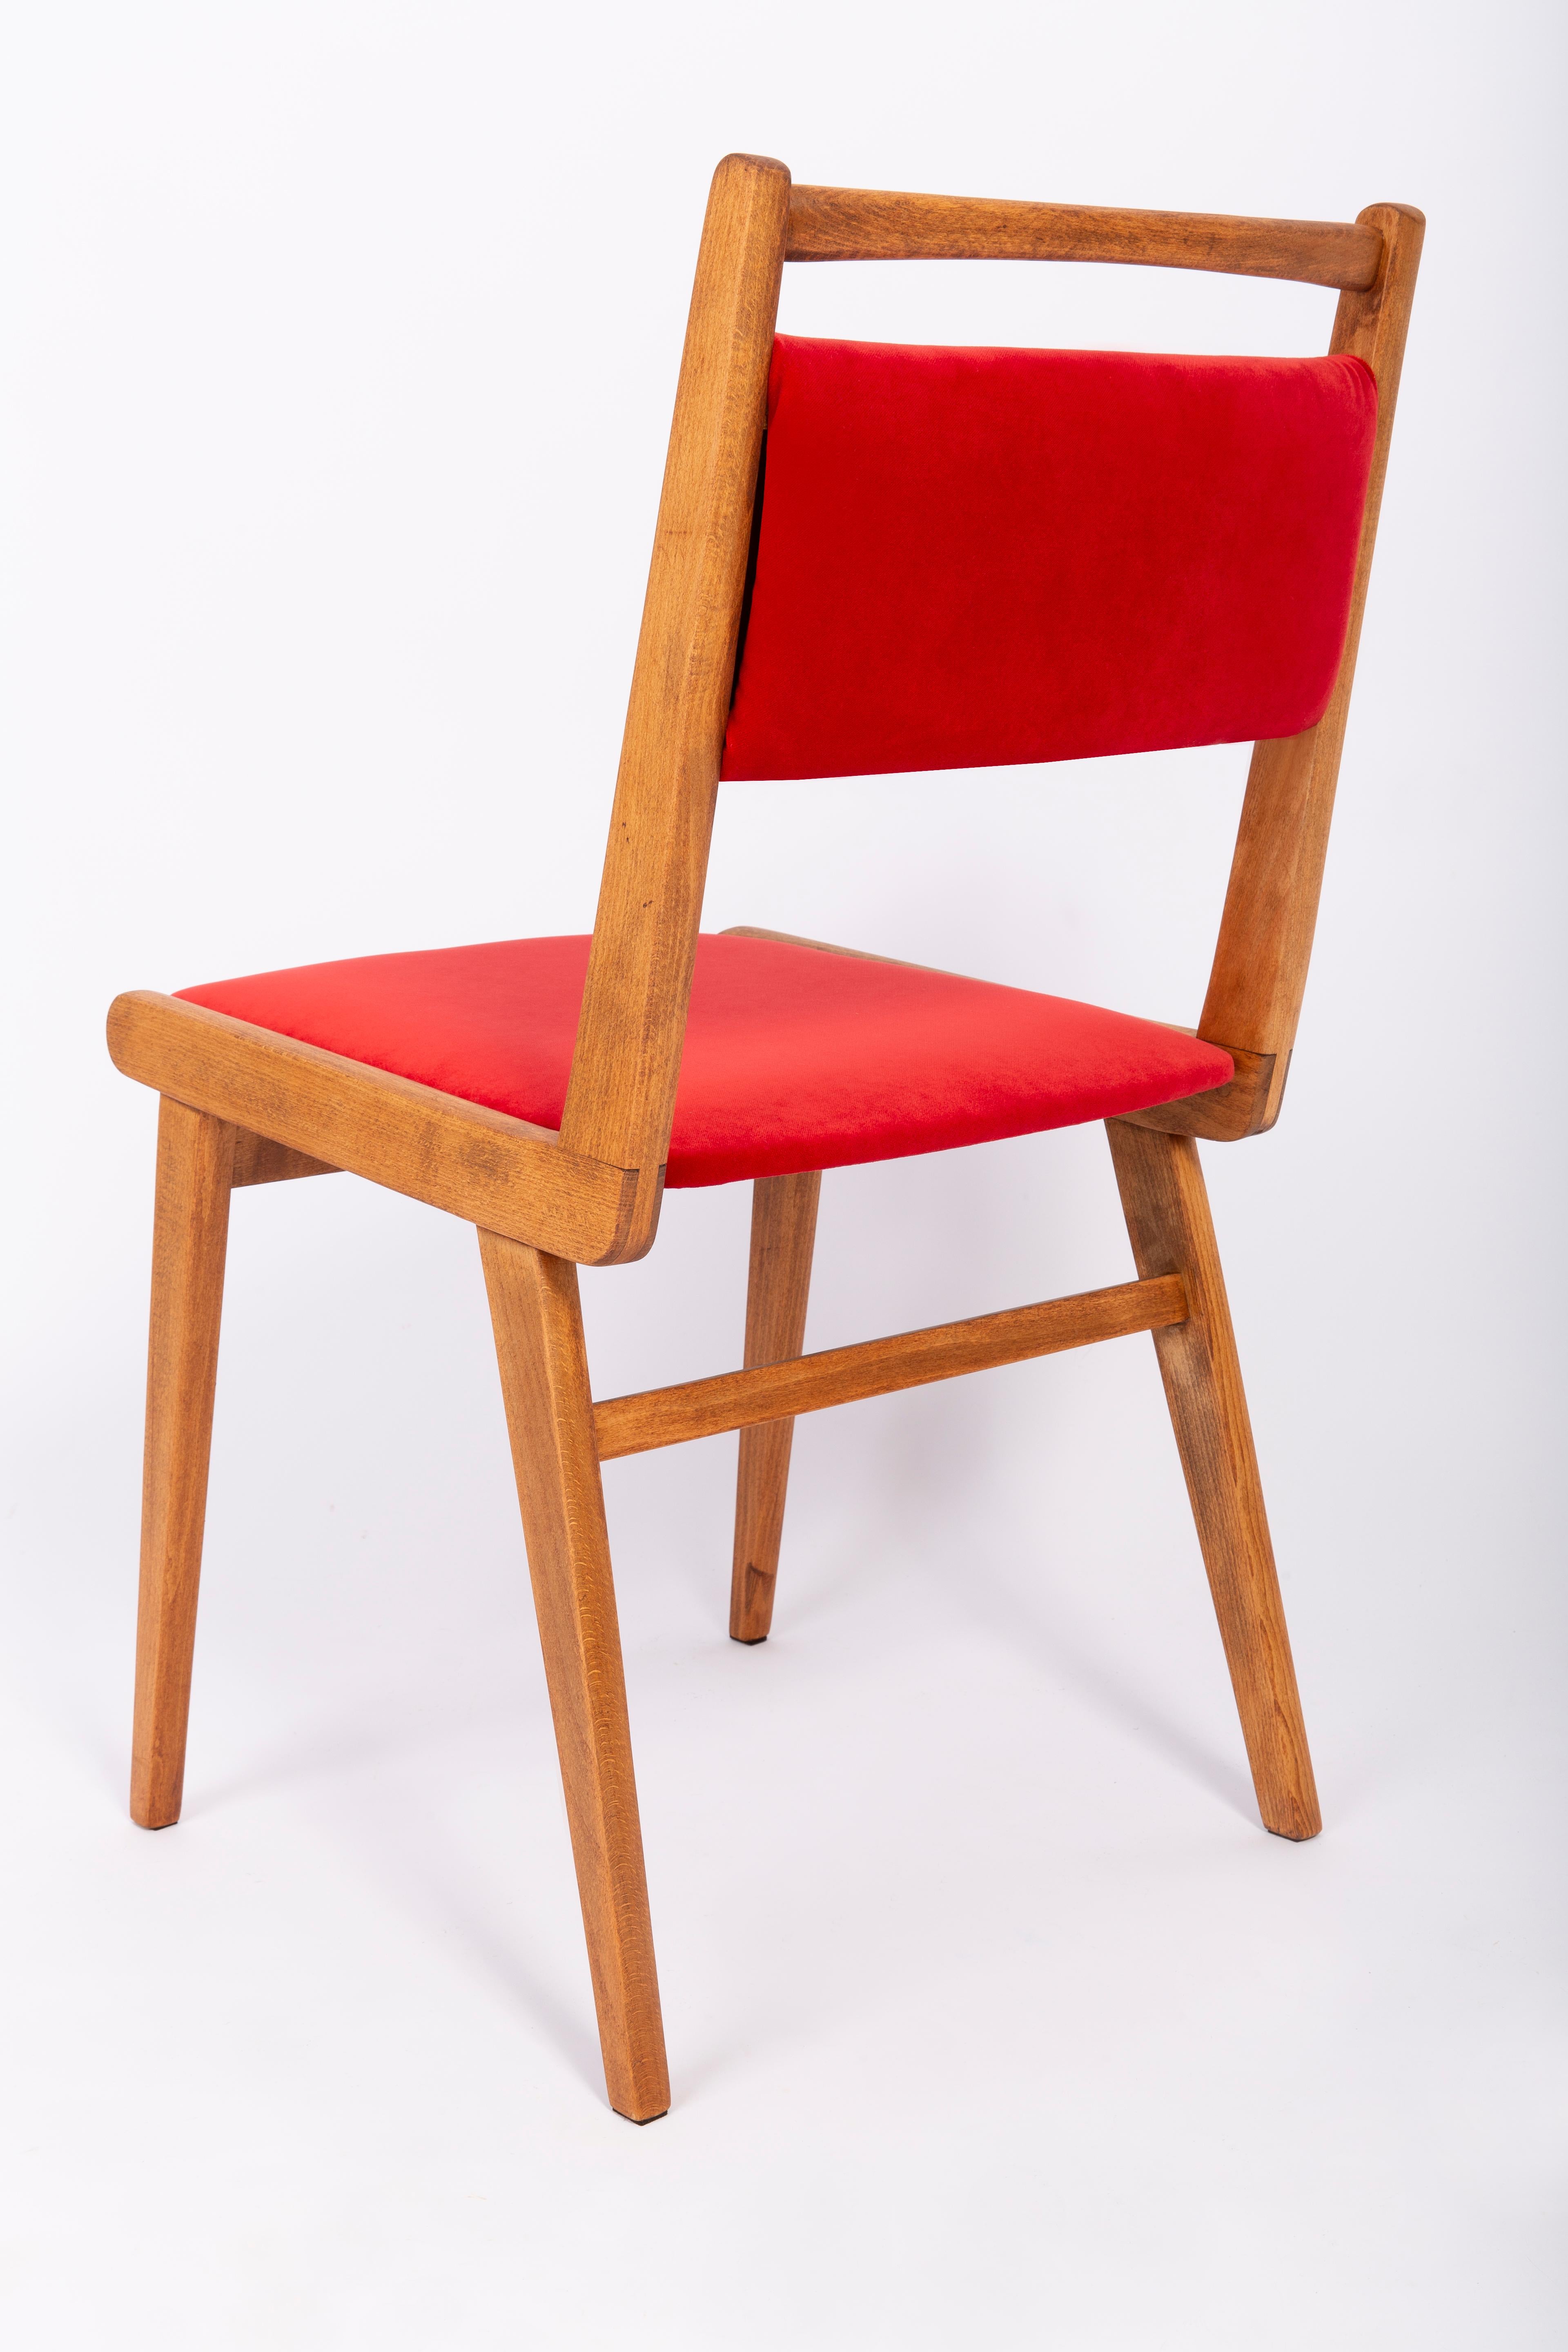 20th Century Red Velvet Chair, Poland, 1960s For Sale 1